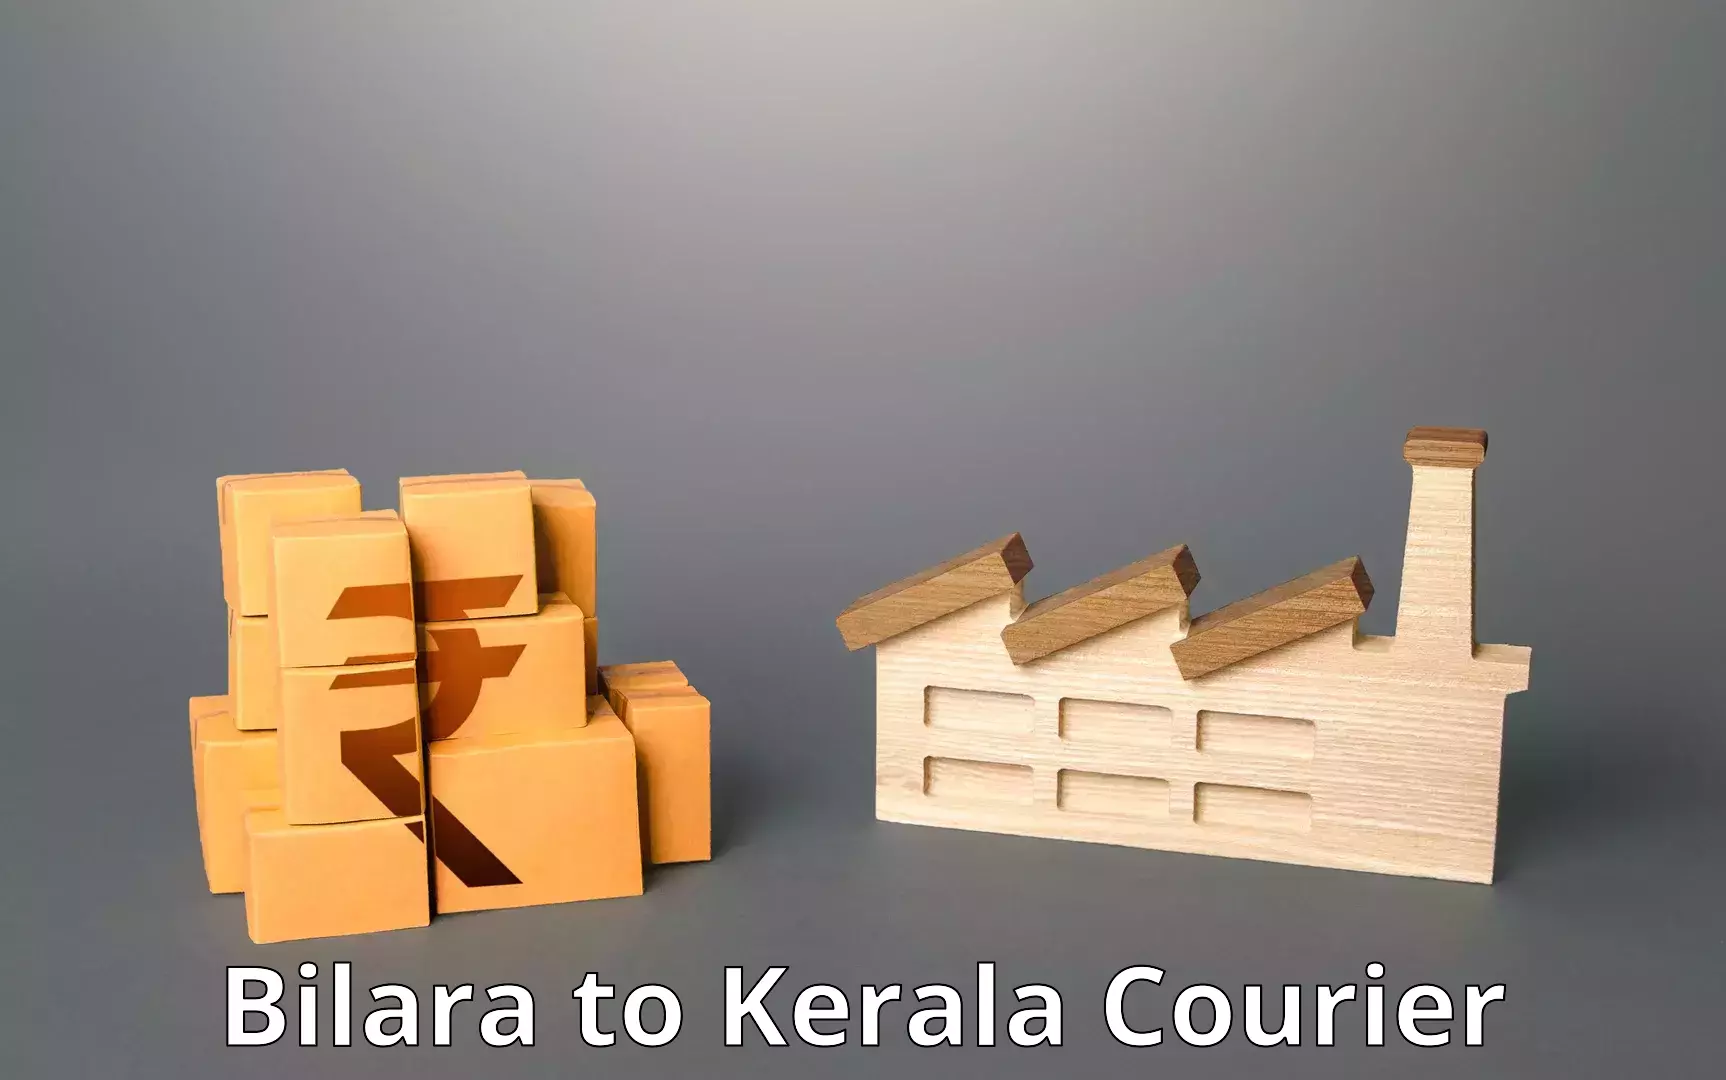 User-friendly courier app Bilara to Kerala